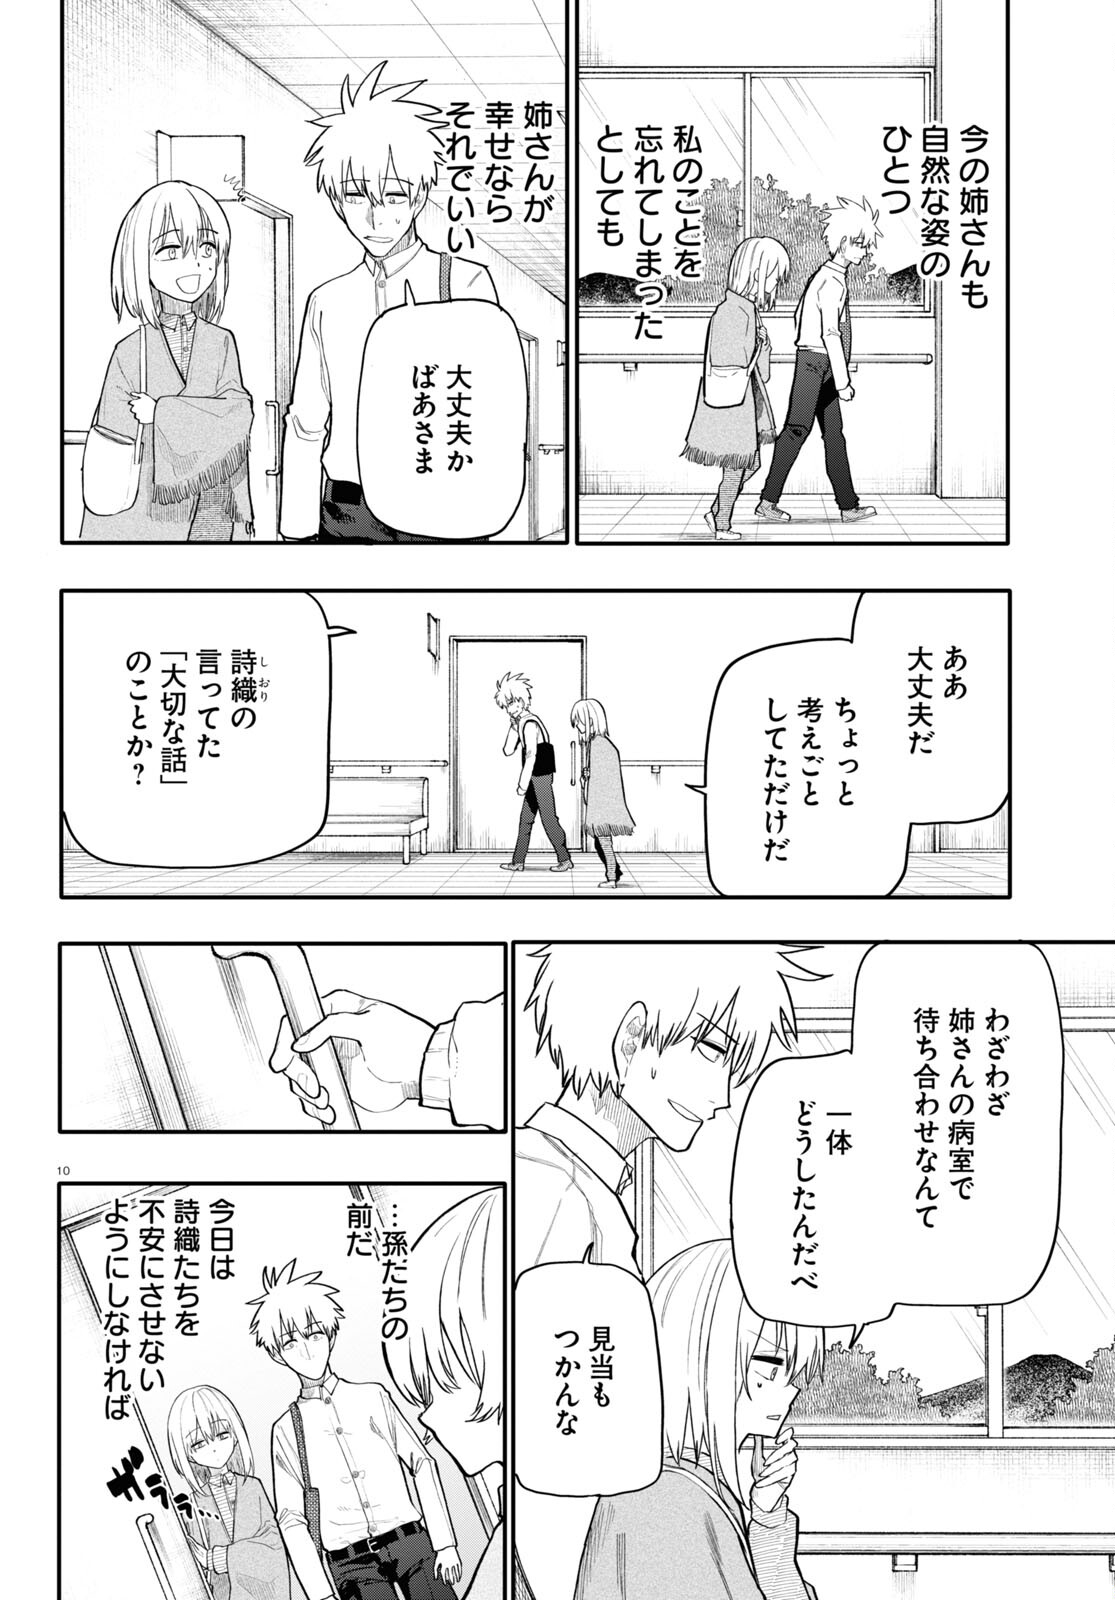 Ojii-san to Obaa-san ga Wakigaetta Hanashi - Chapter 180 - Page 2